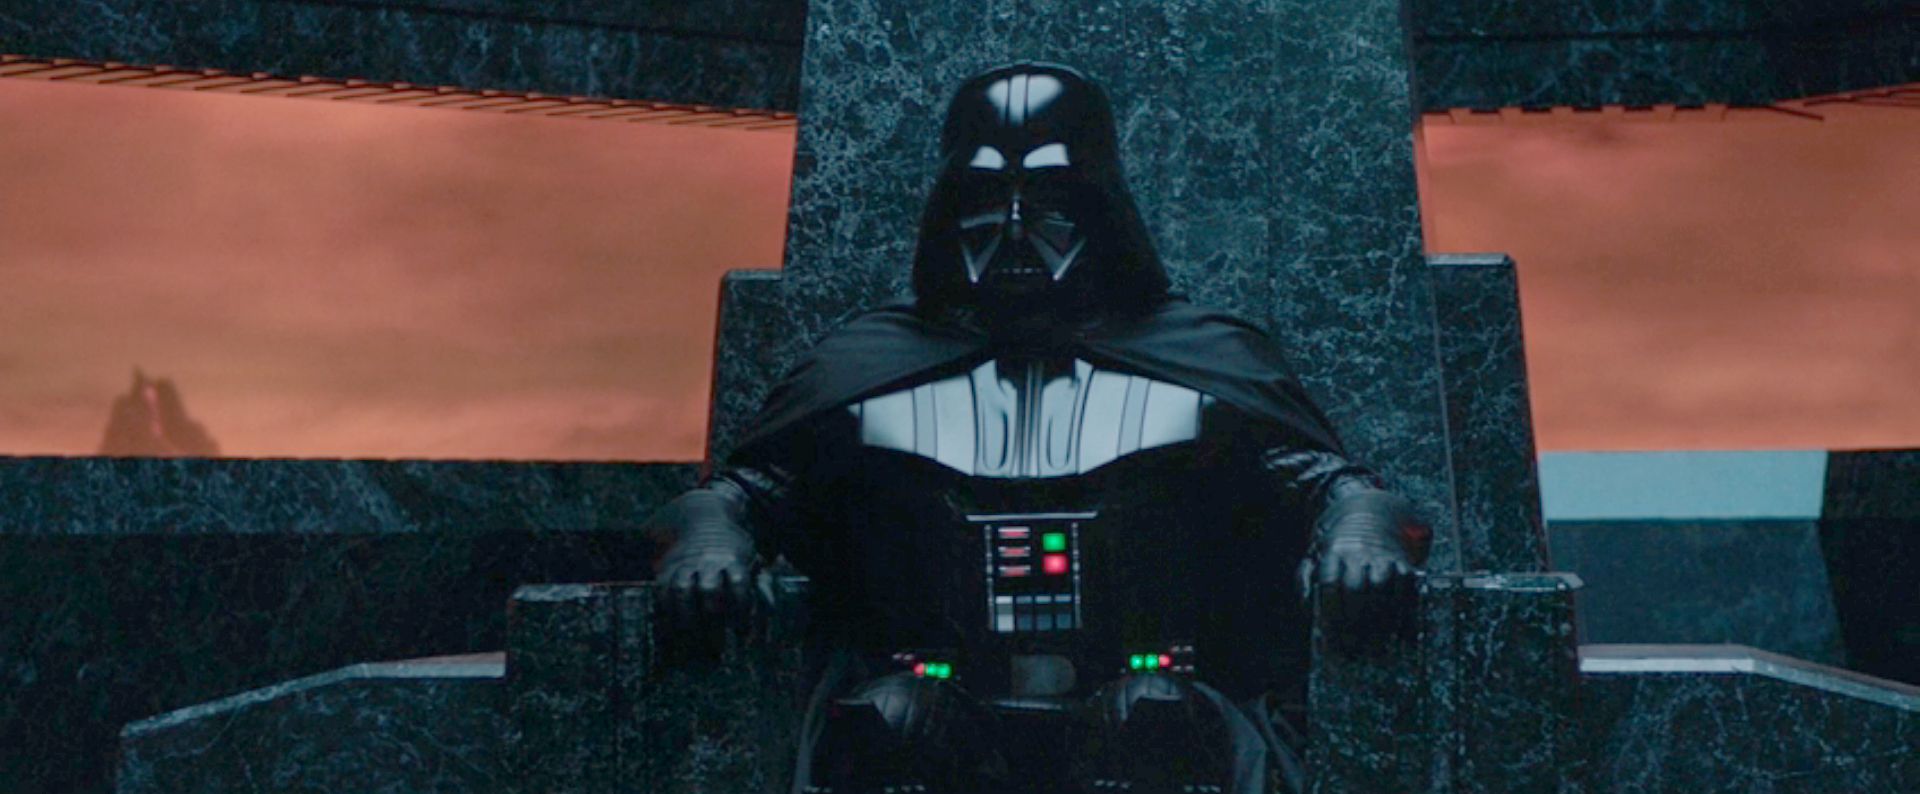 Did German Speakers Understand The Darth Vader Reveal Before Anyone Else?